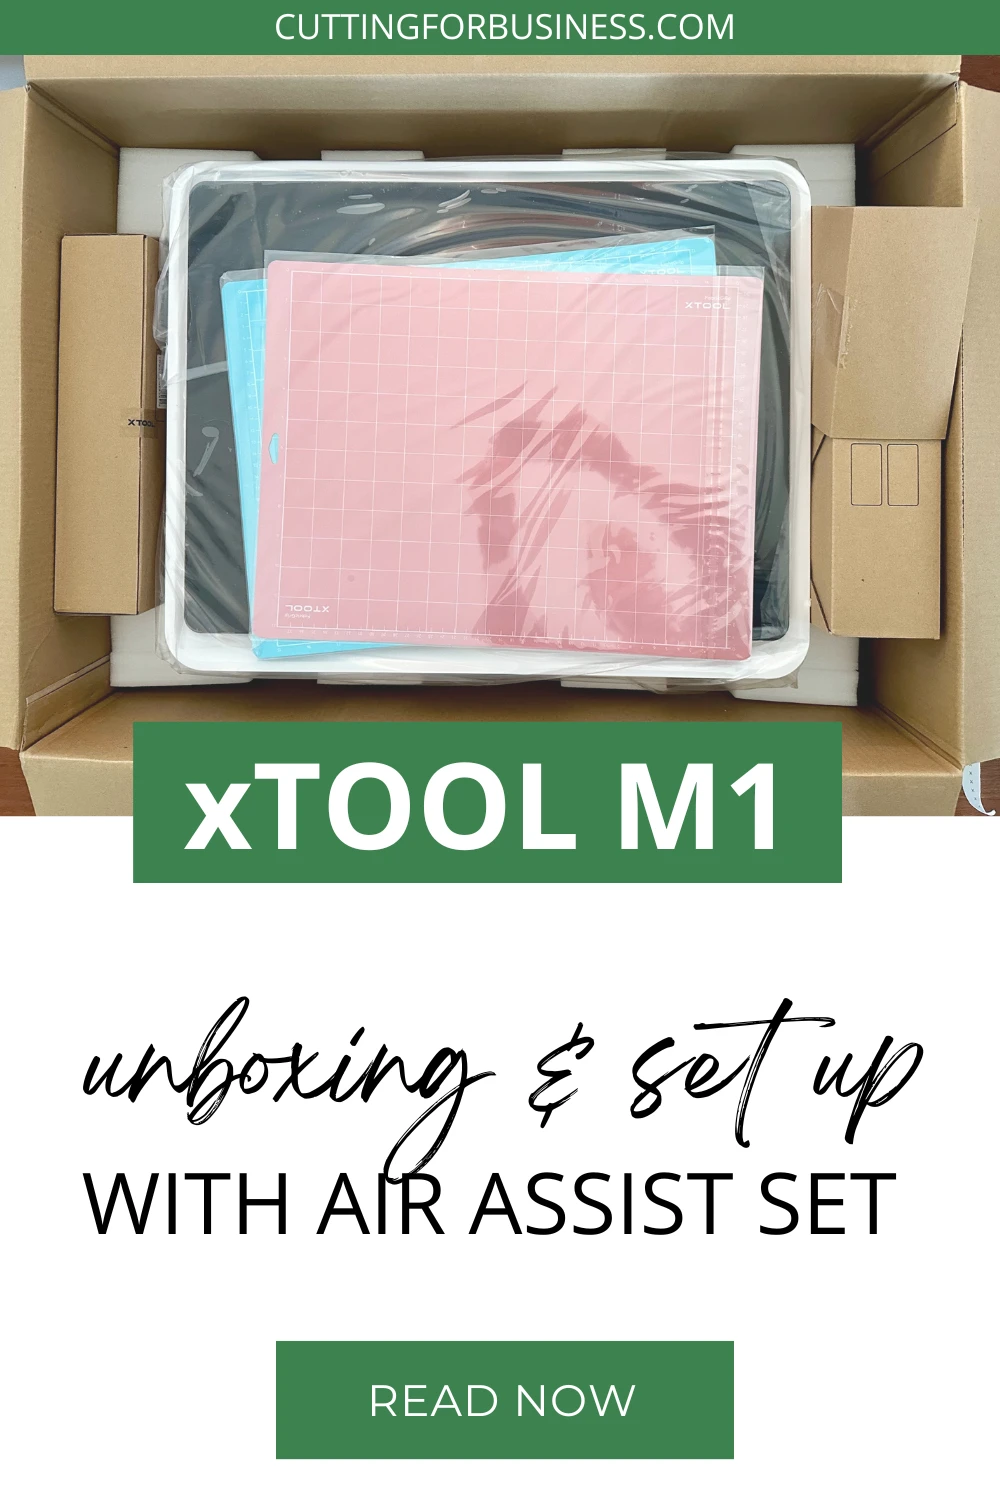 xTool M1 Laser Cutting Air Assist Set